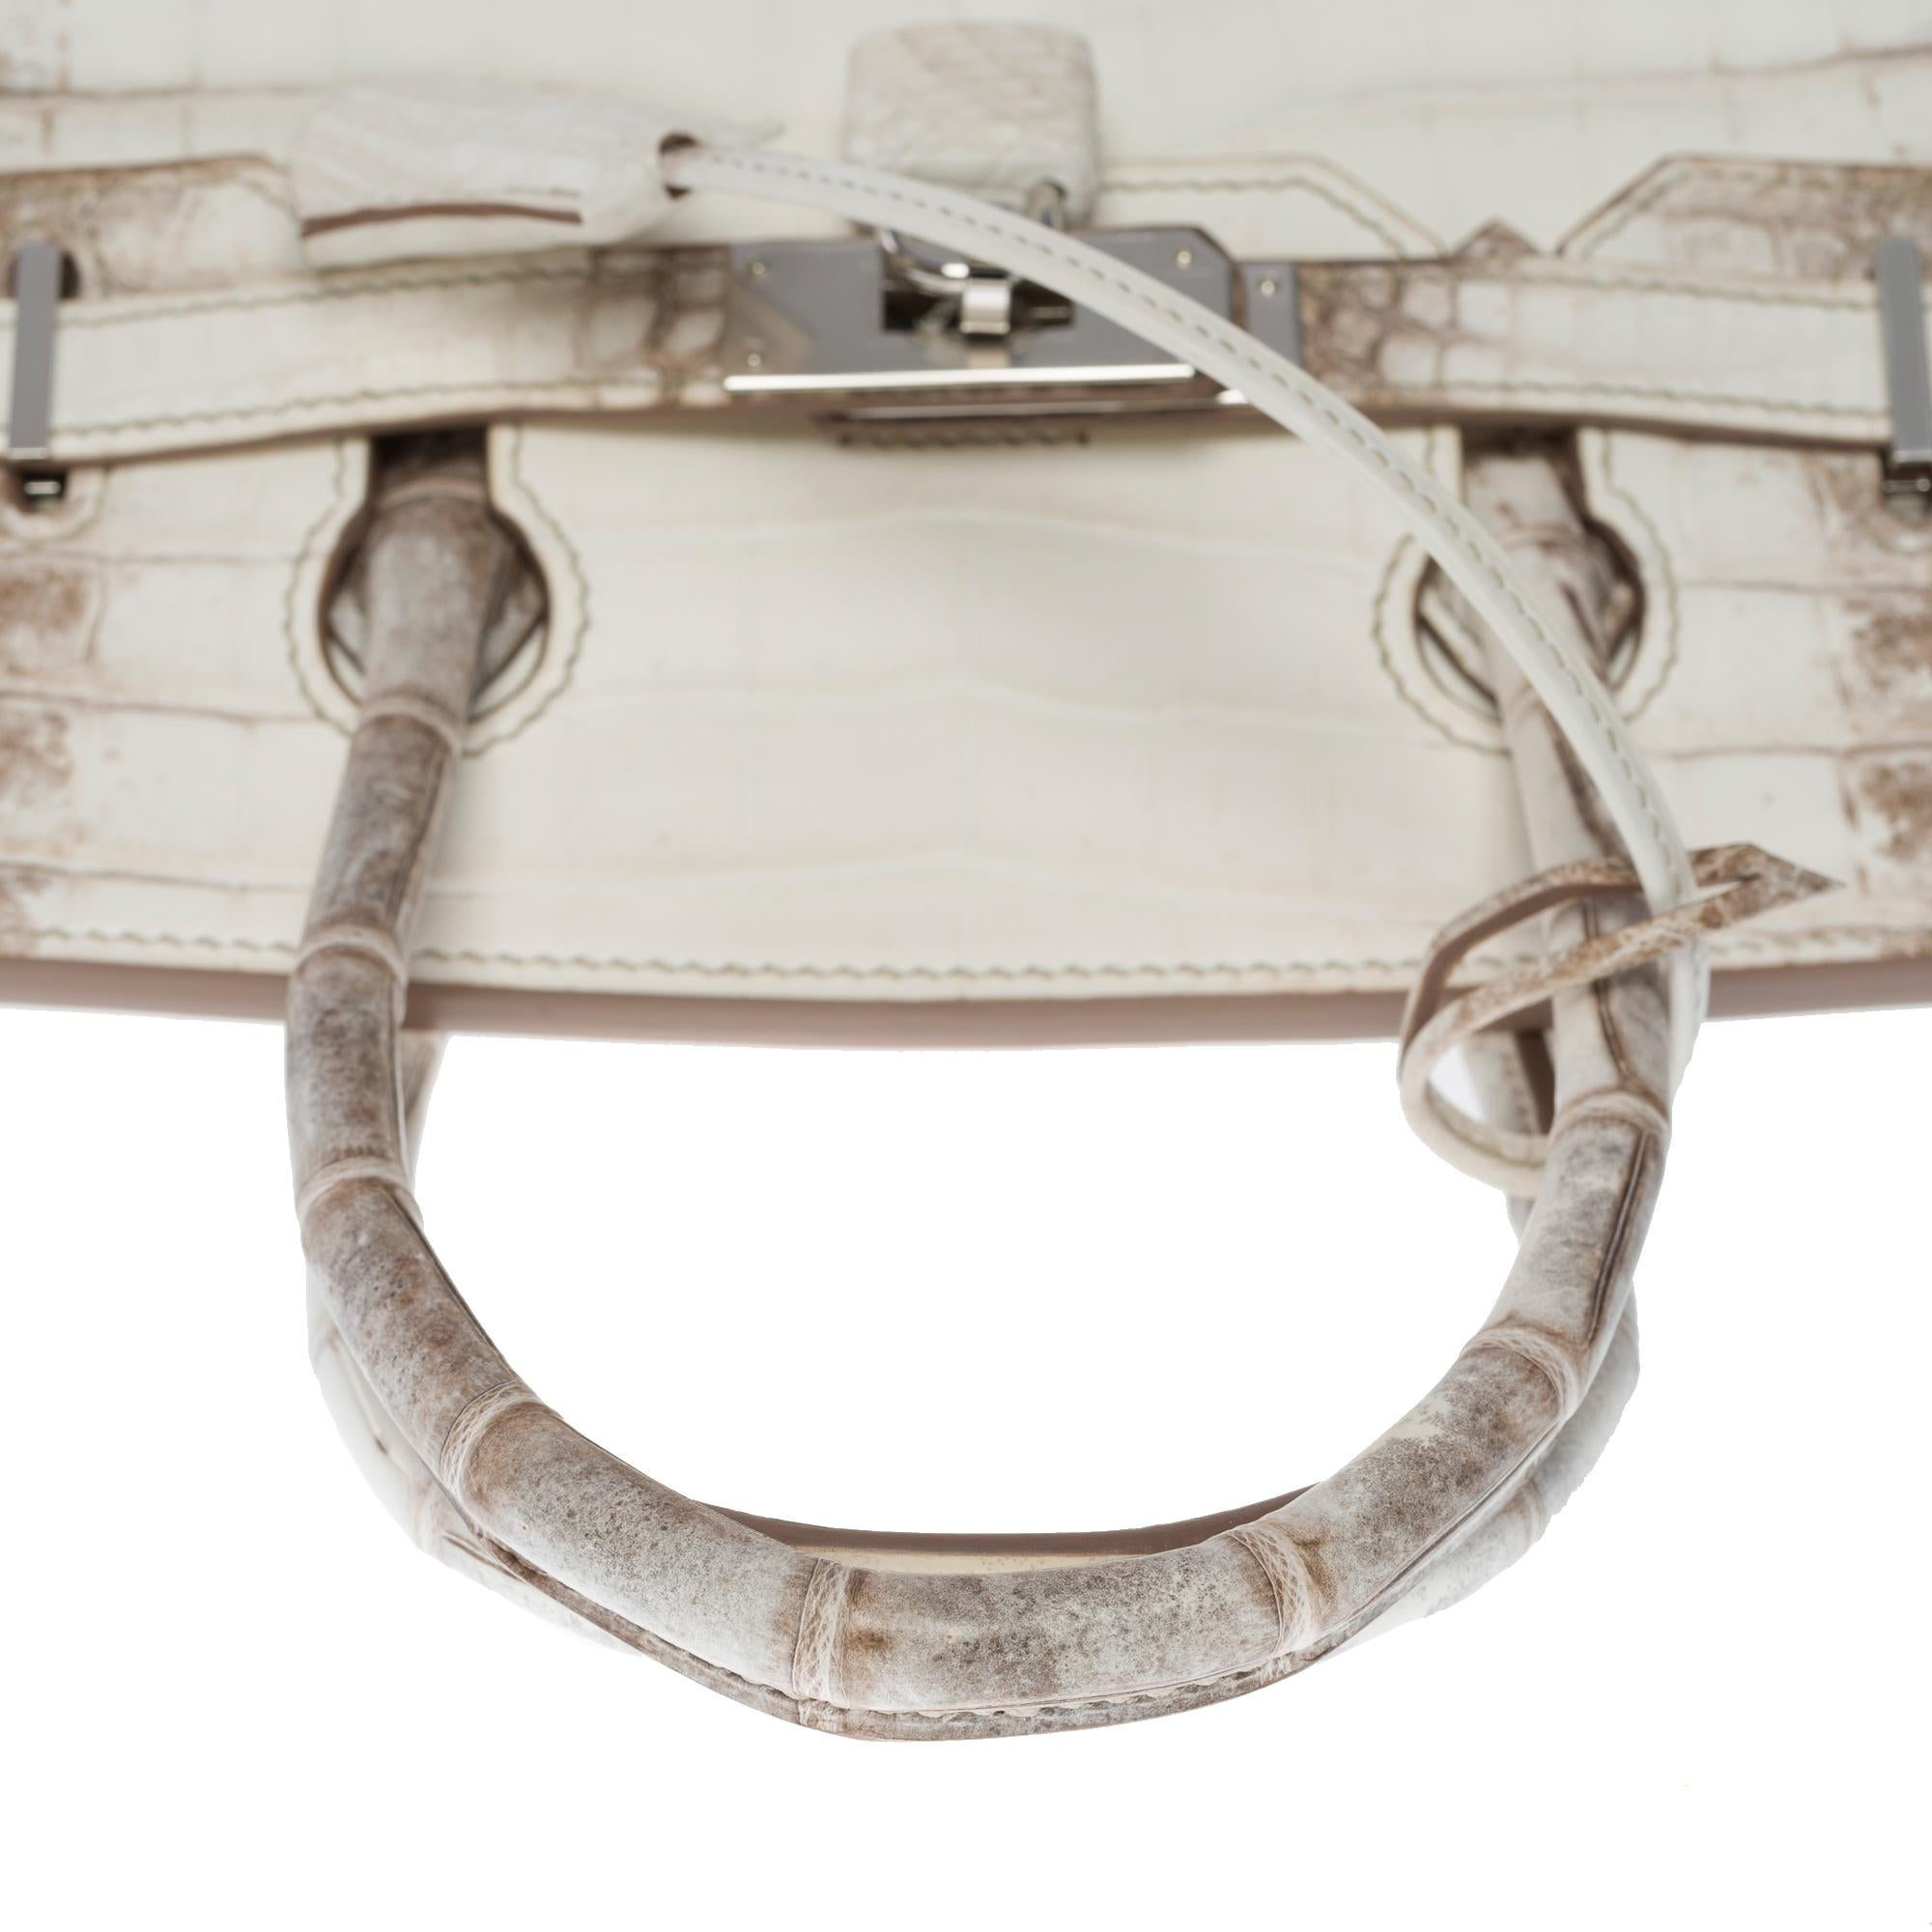 Rare New Hermès Birkin 30 Himalaya handbag in white Nile Crocodile leather, SHW 3